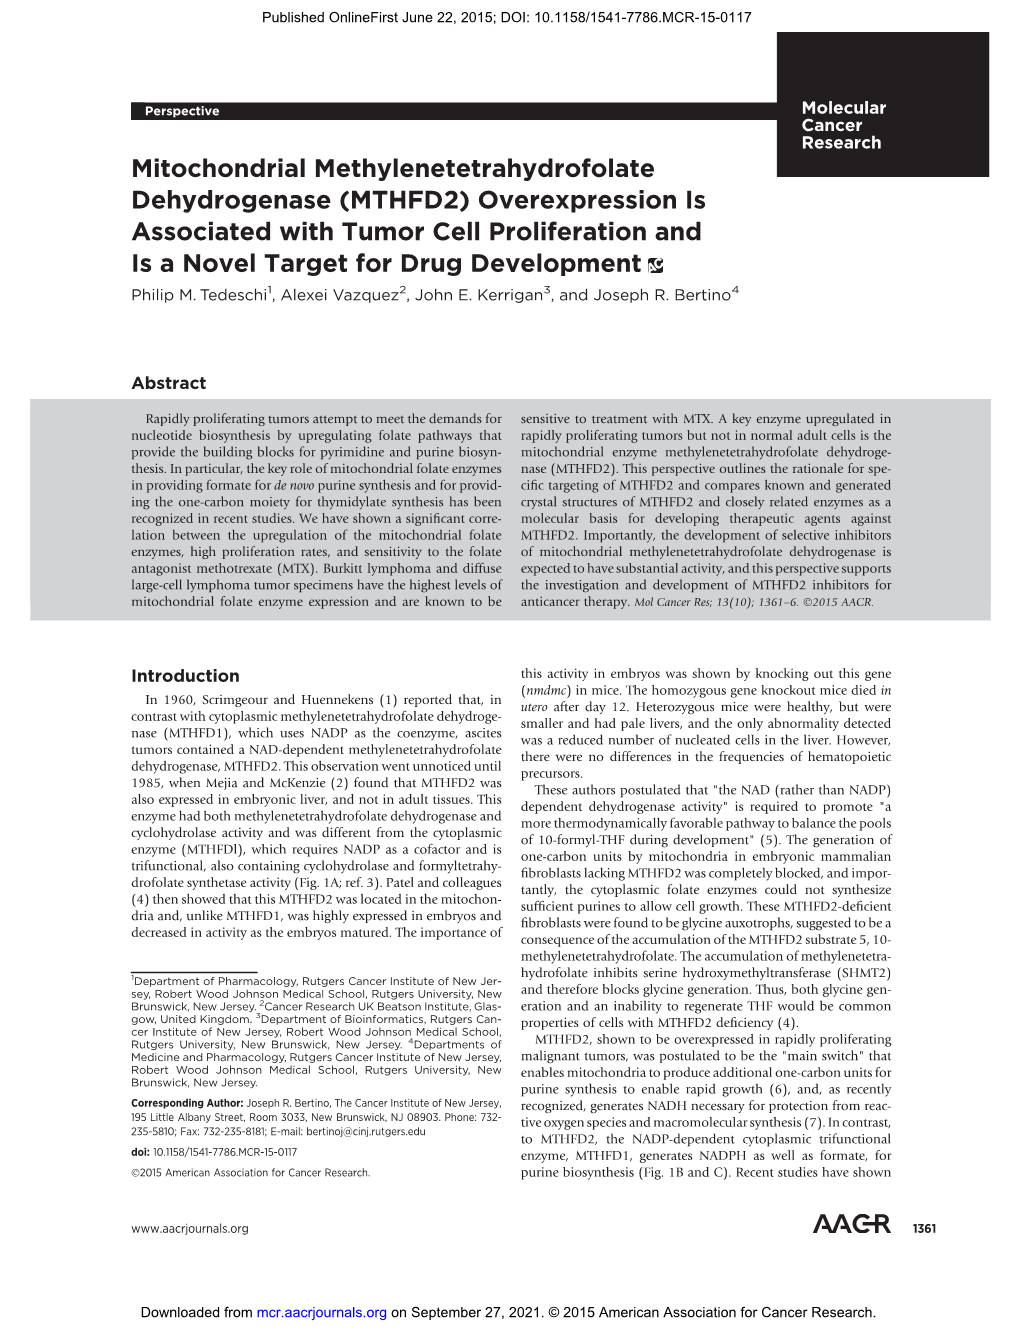 Mitochondrial Methylenetetrahydrofolate